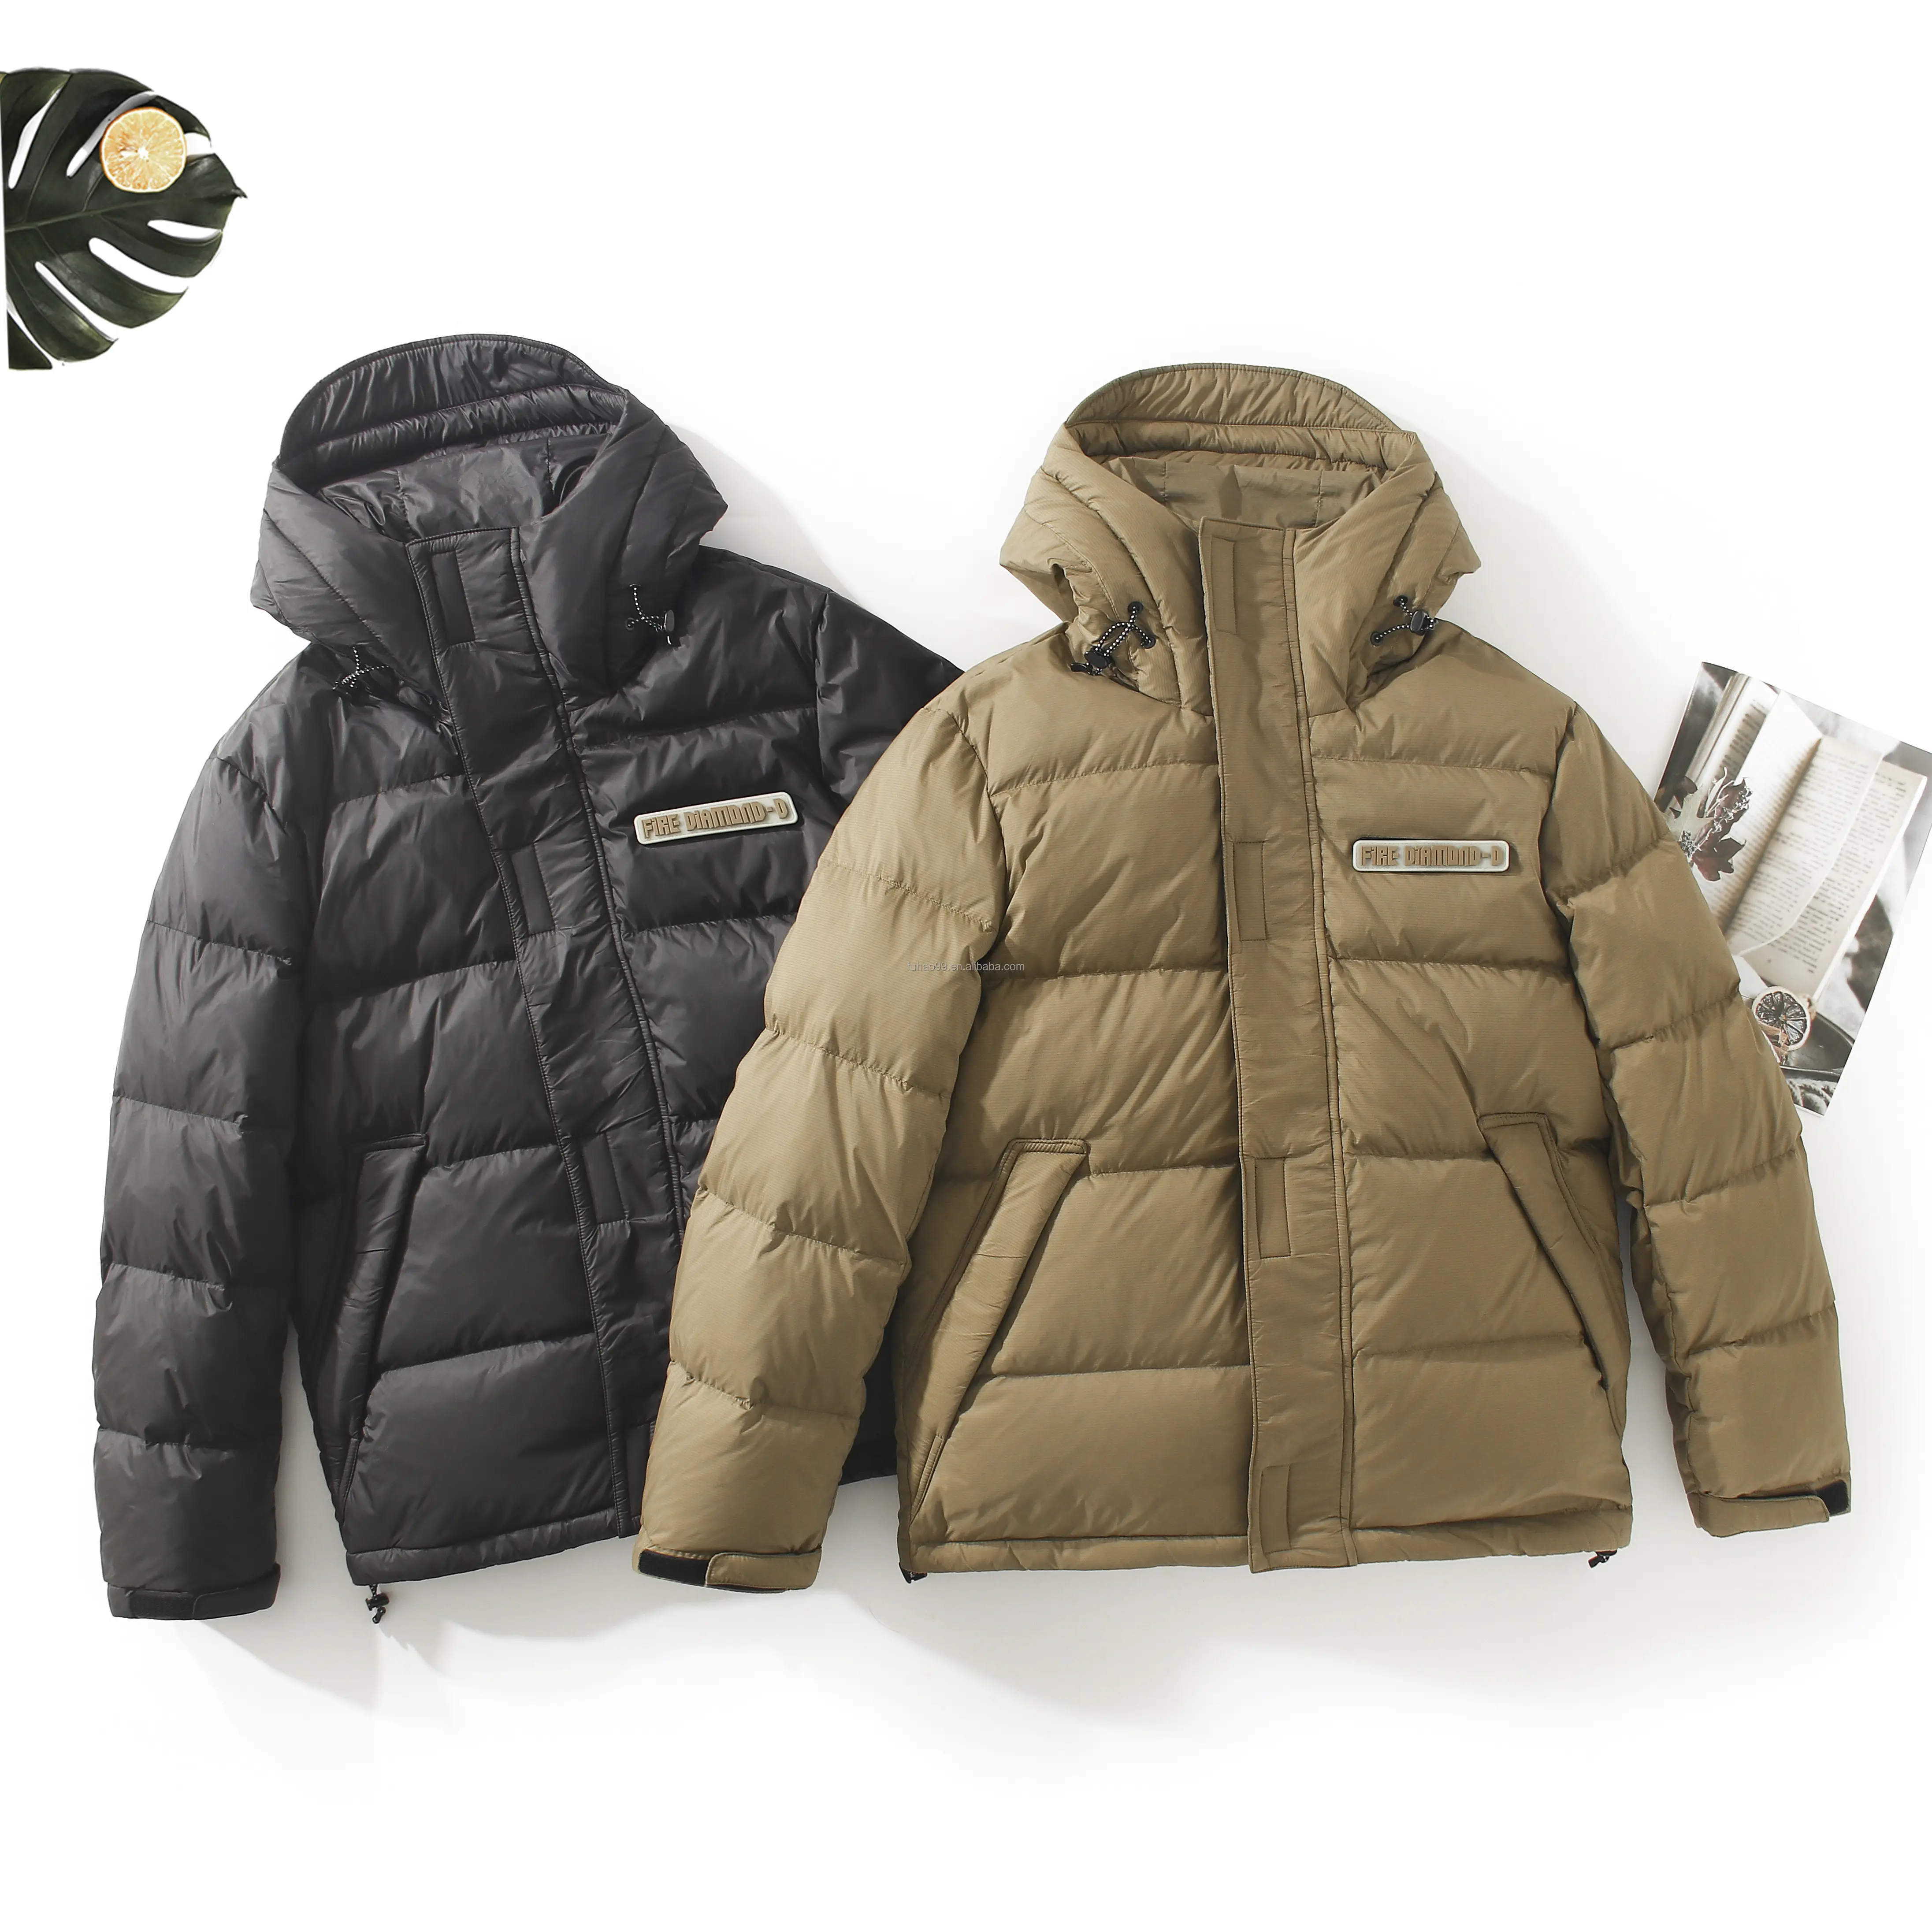 Chaqueta de plumón de pato personalizada para hombre, chaqueta cálida de invierno de tela acolchada con capucha negra